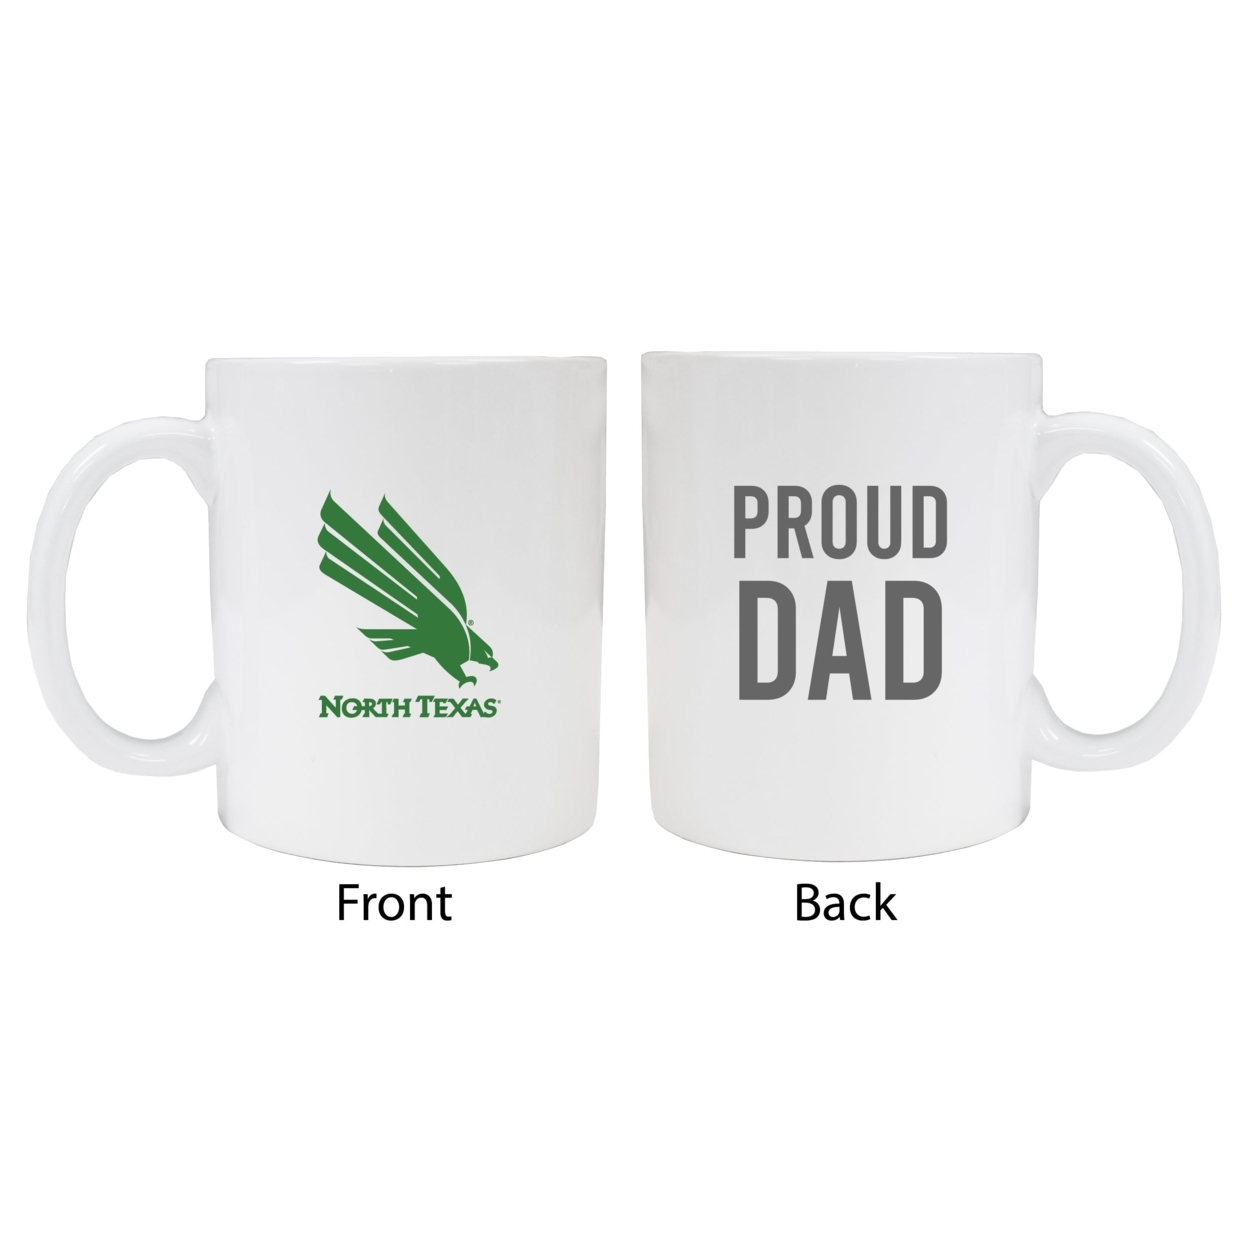 North Texas Proud Dad Ceramic Coffee Mug - White (2 Pack)